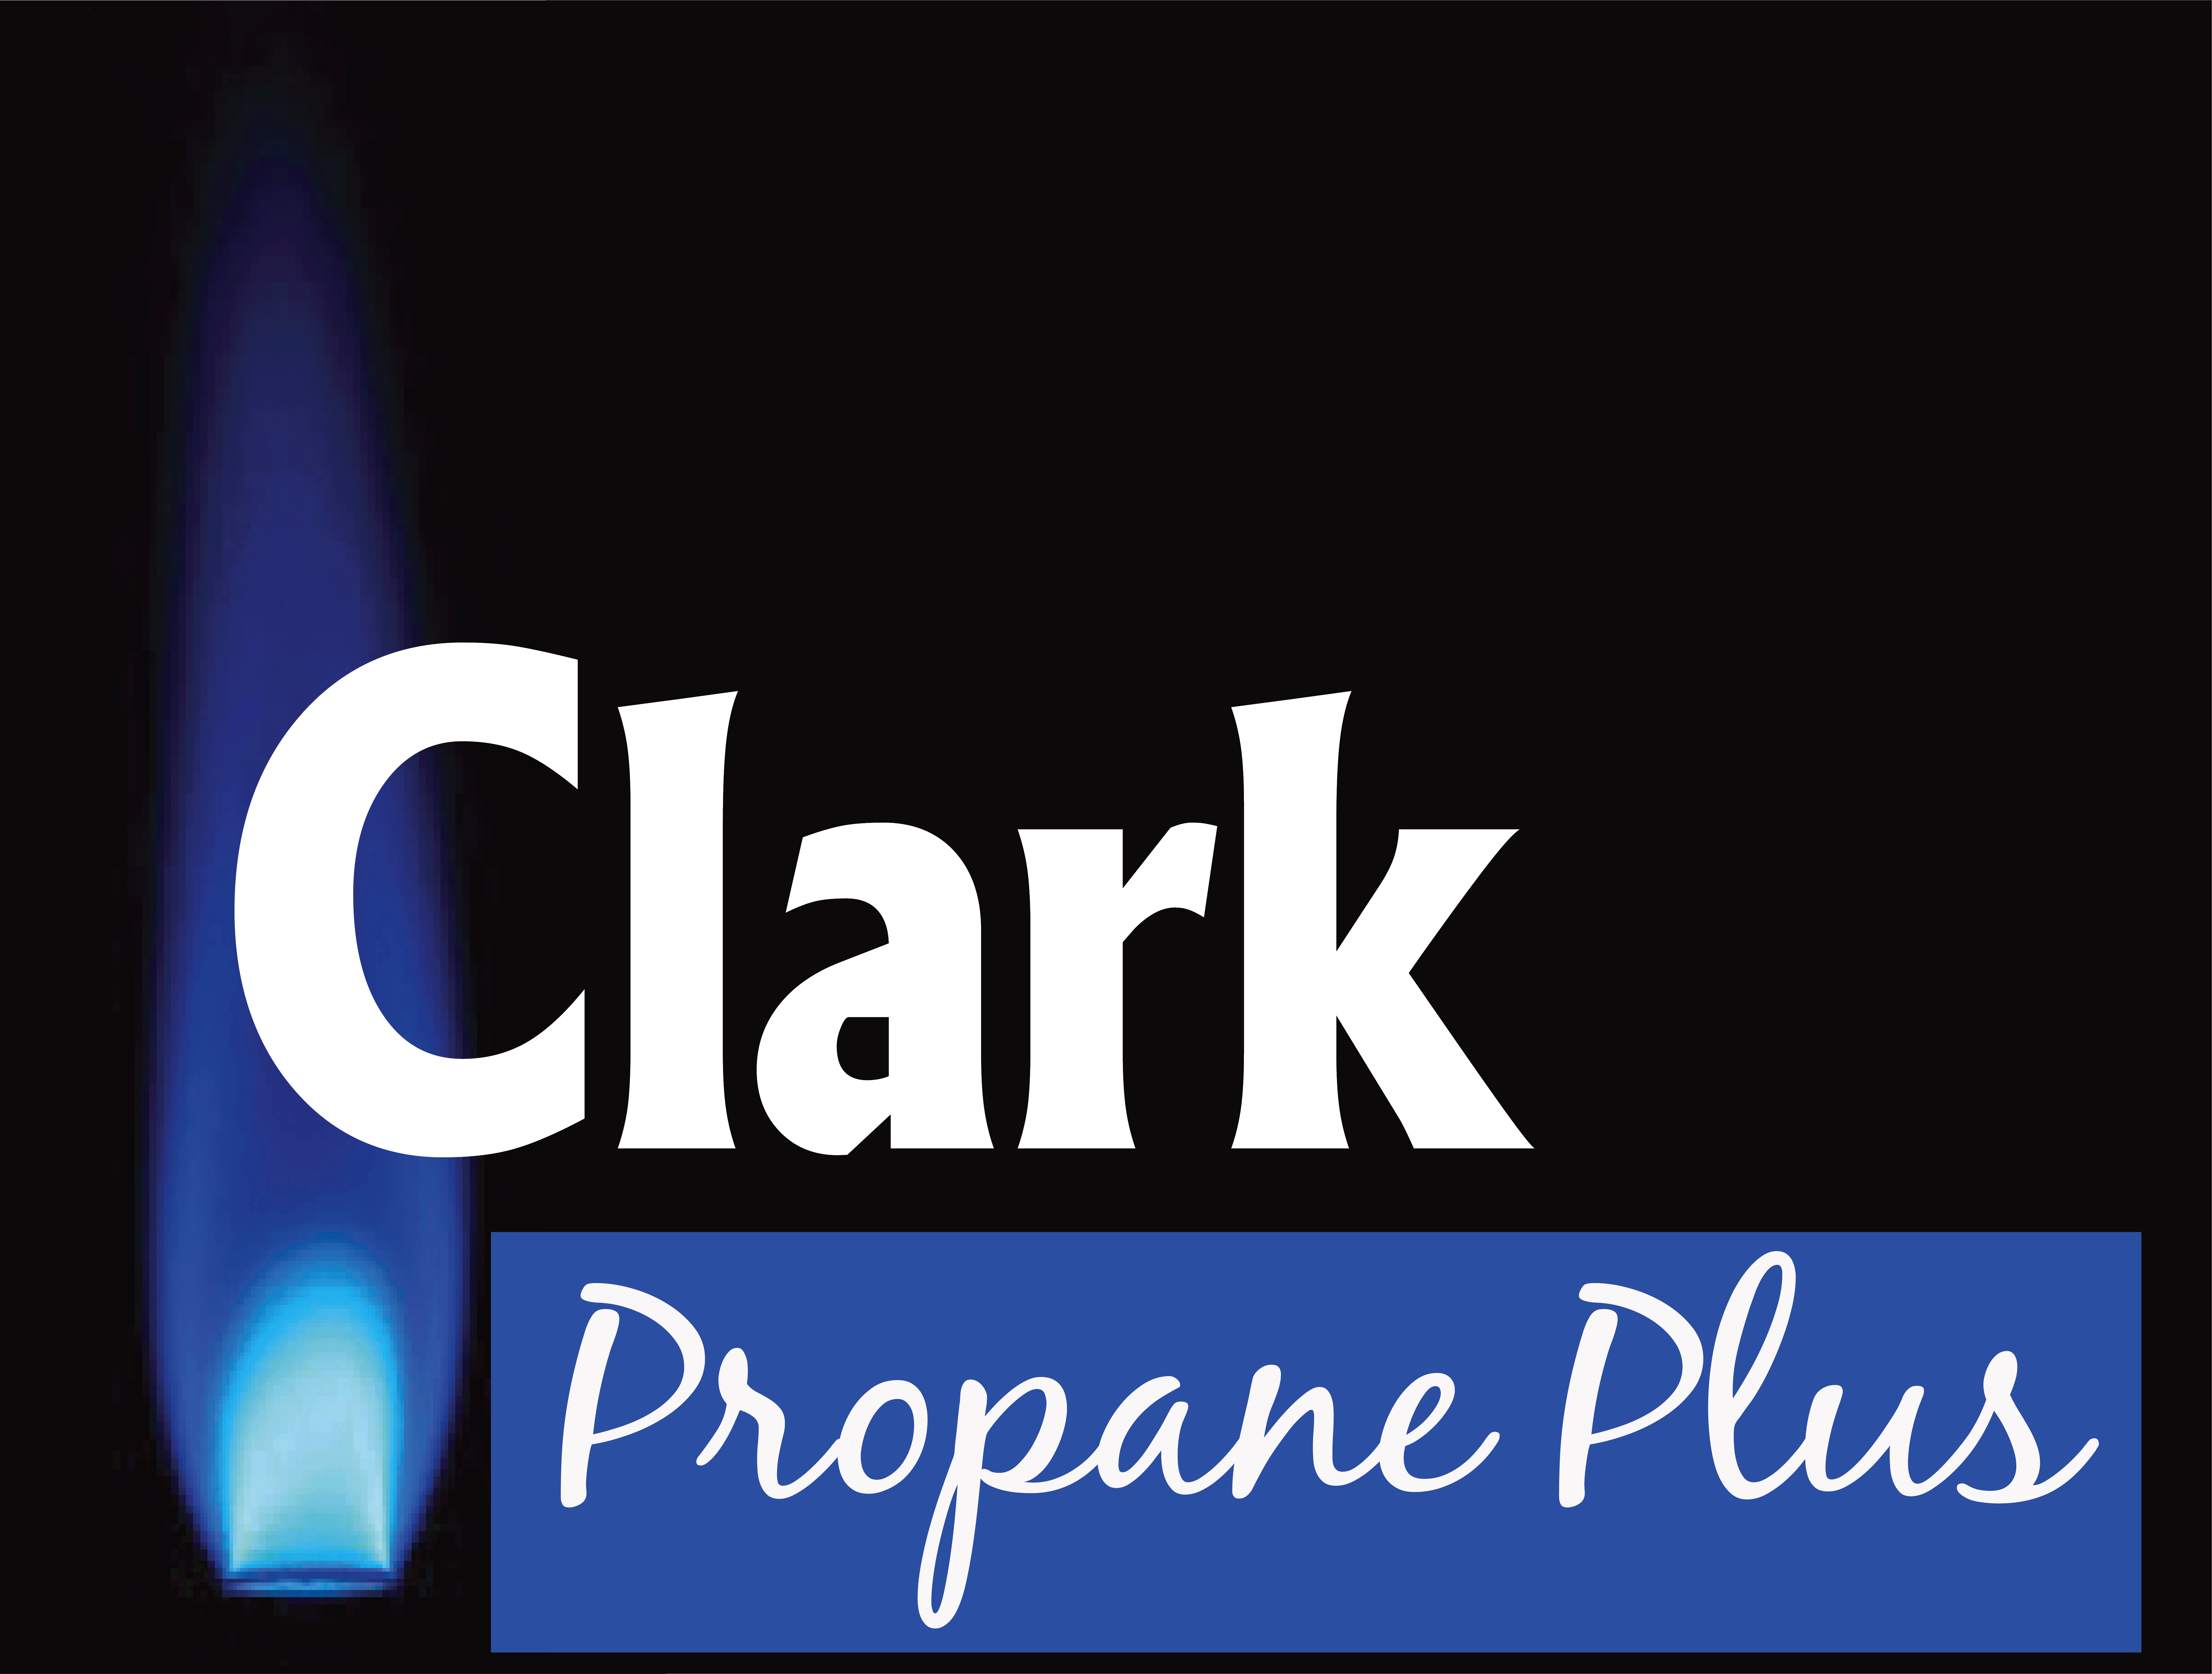 Clark Propane Plus of Winchester